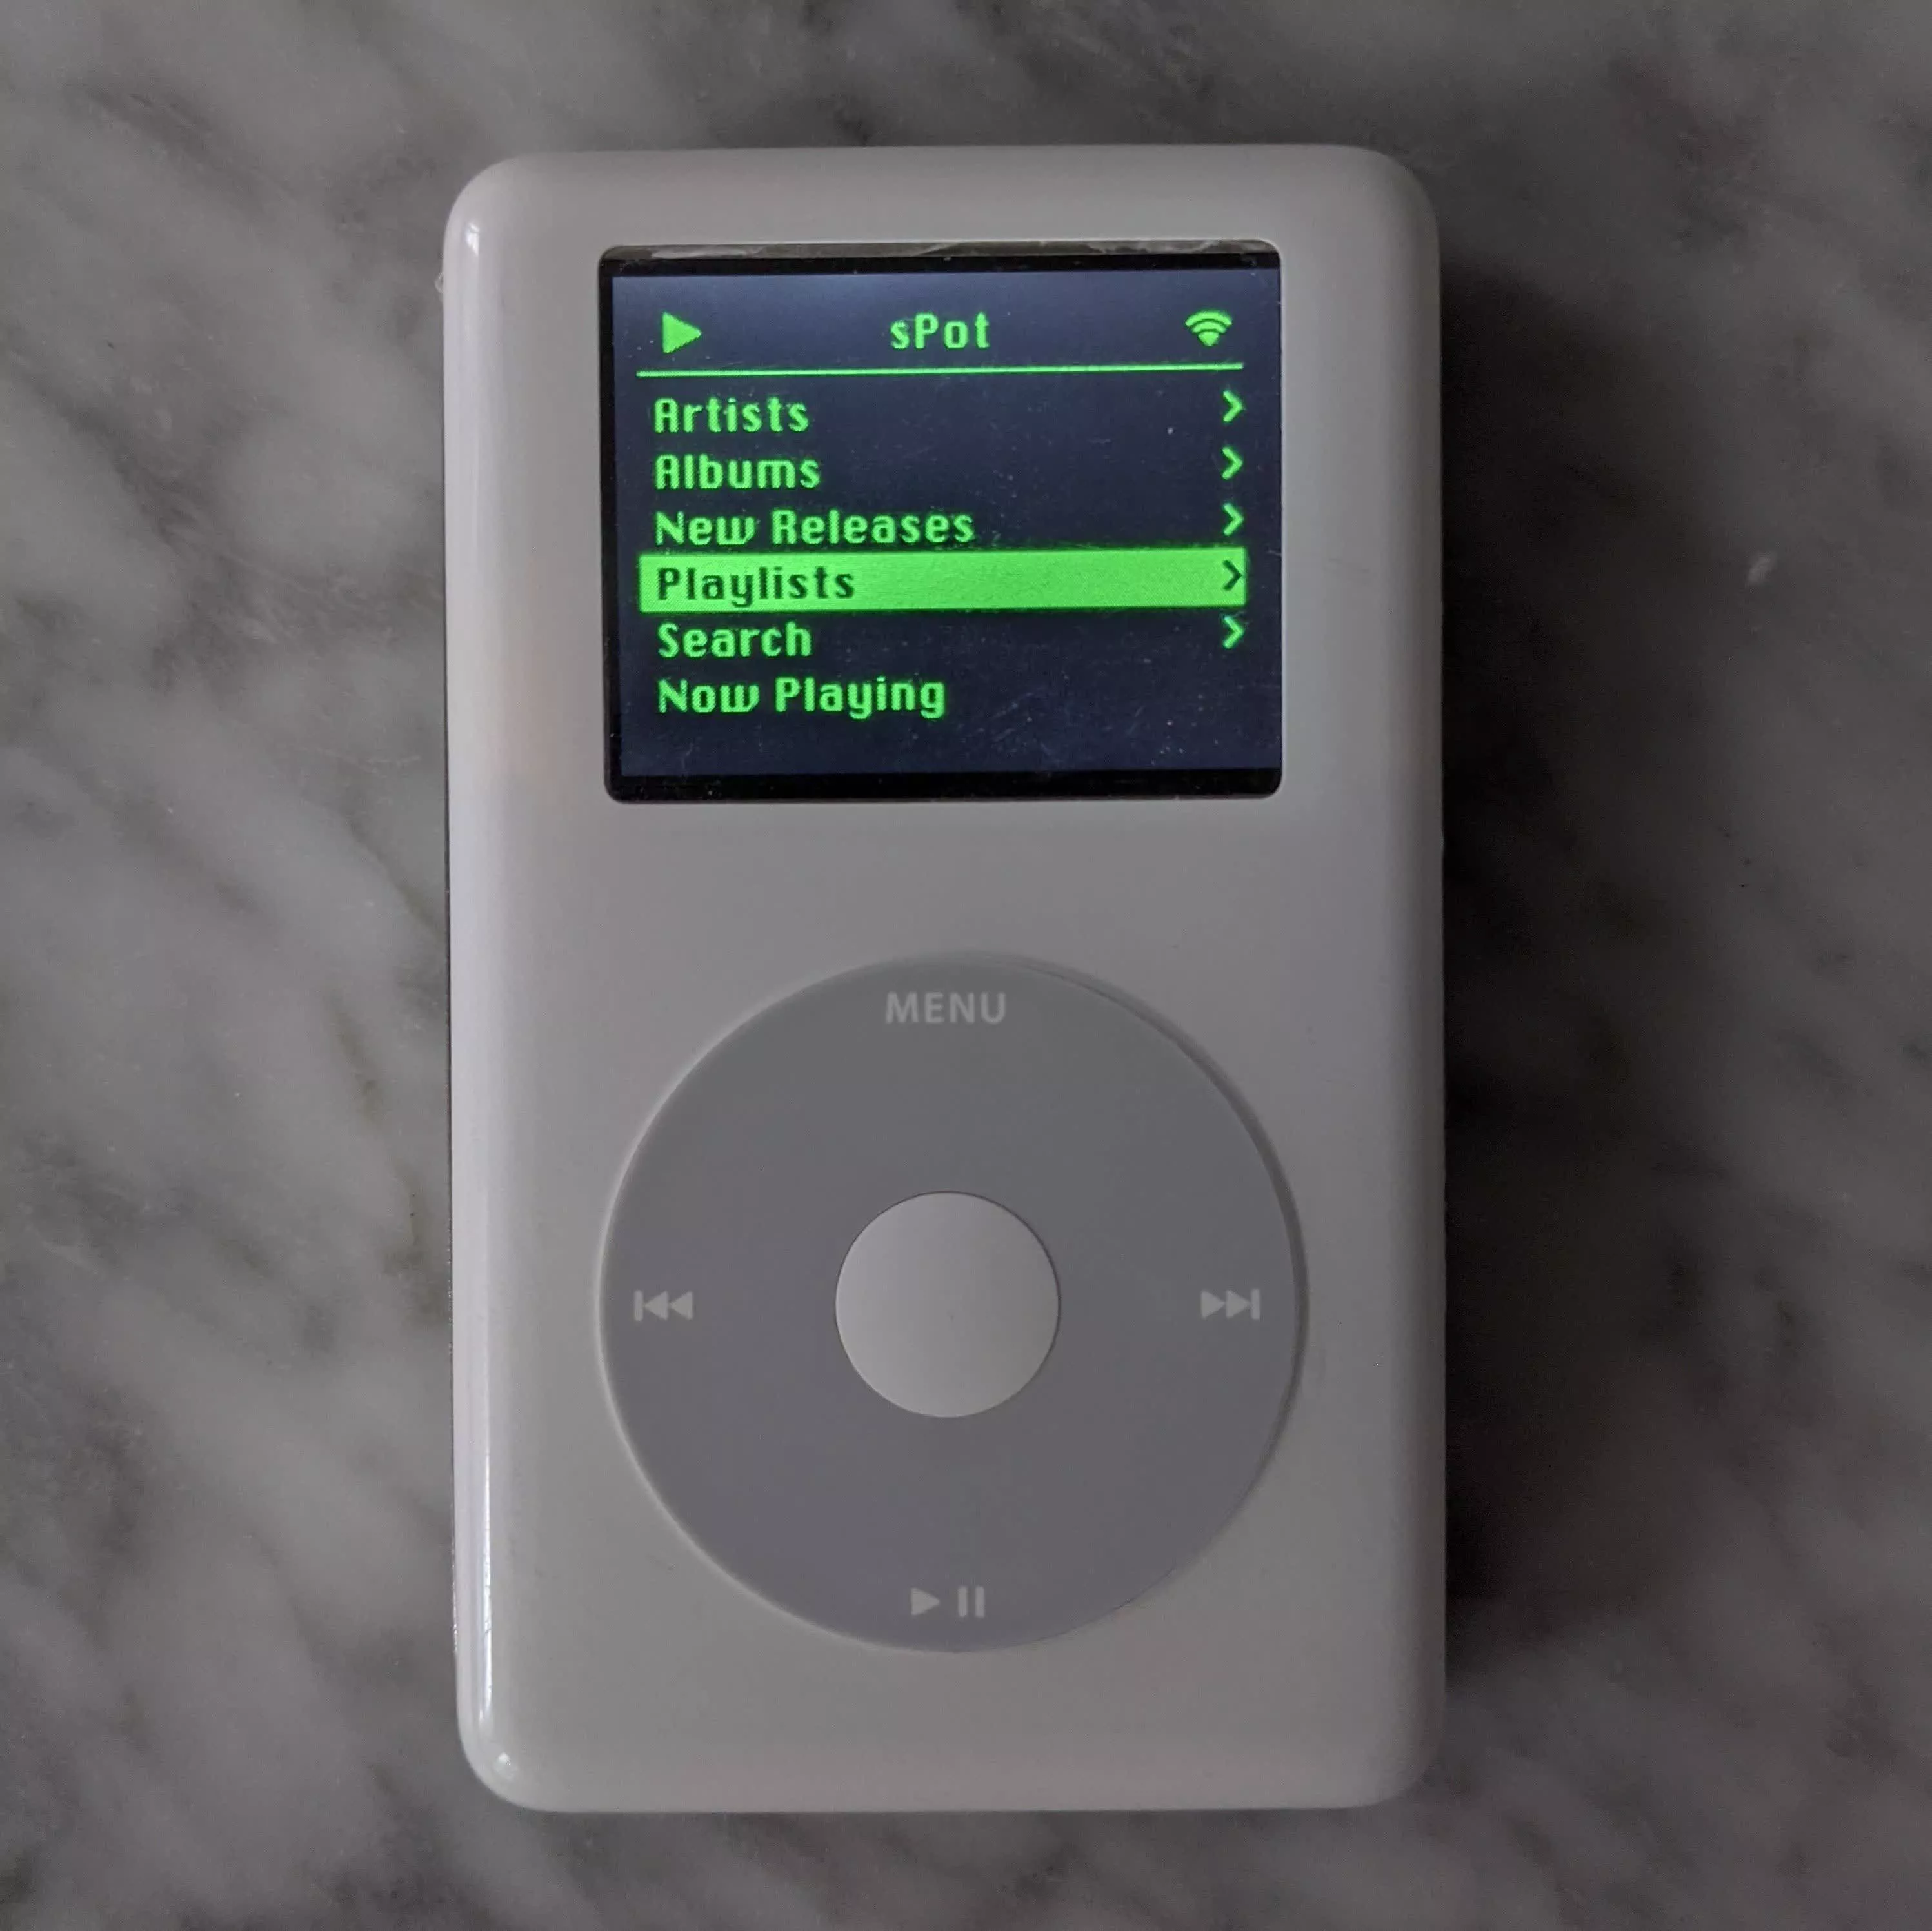 Someone modified an iPod Classic to run Spotify